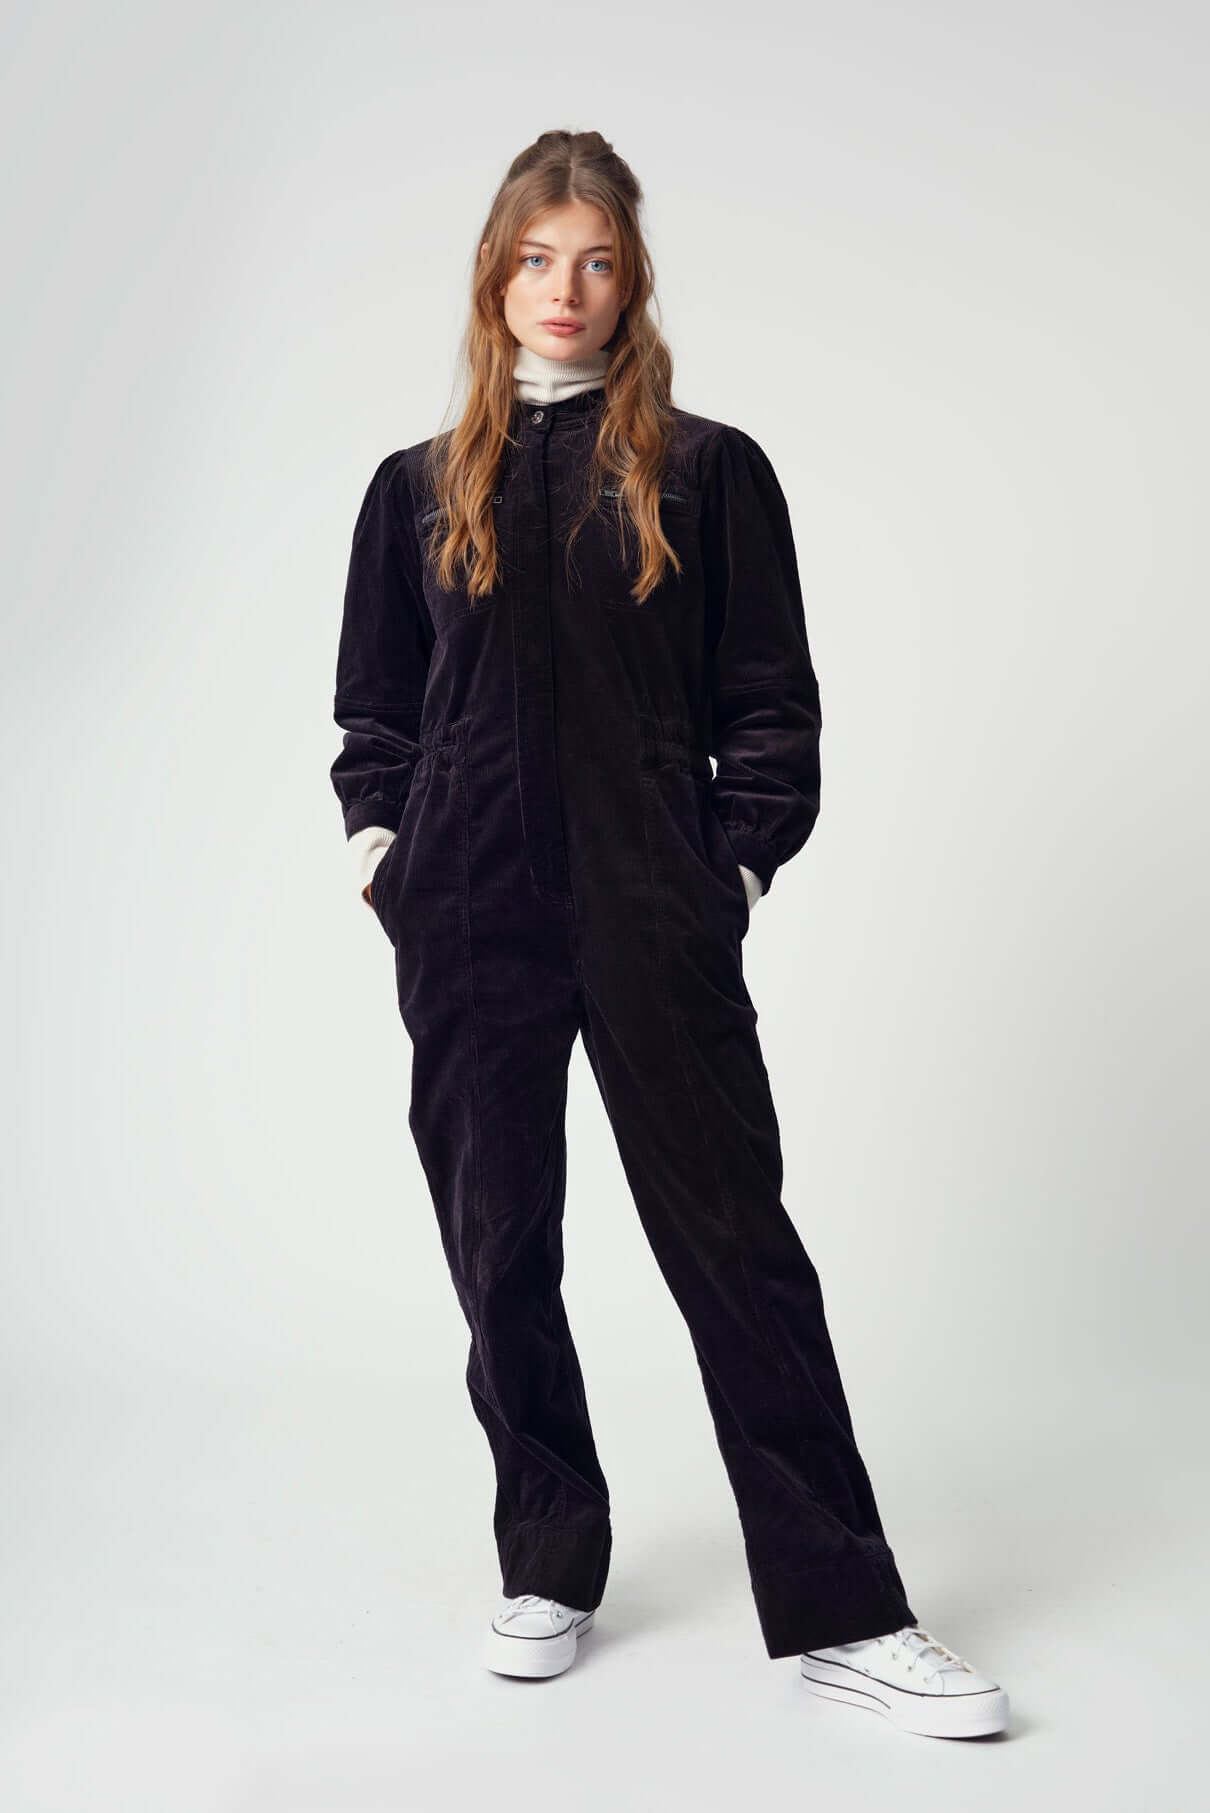 KAWA Womens Organic Cotton Jumpsuit Black, Size 4 / UK 14 / EUR 42